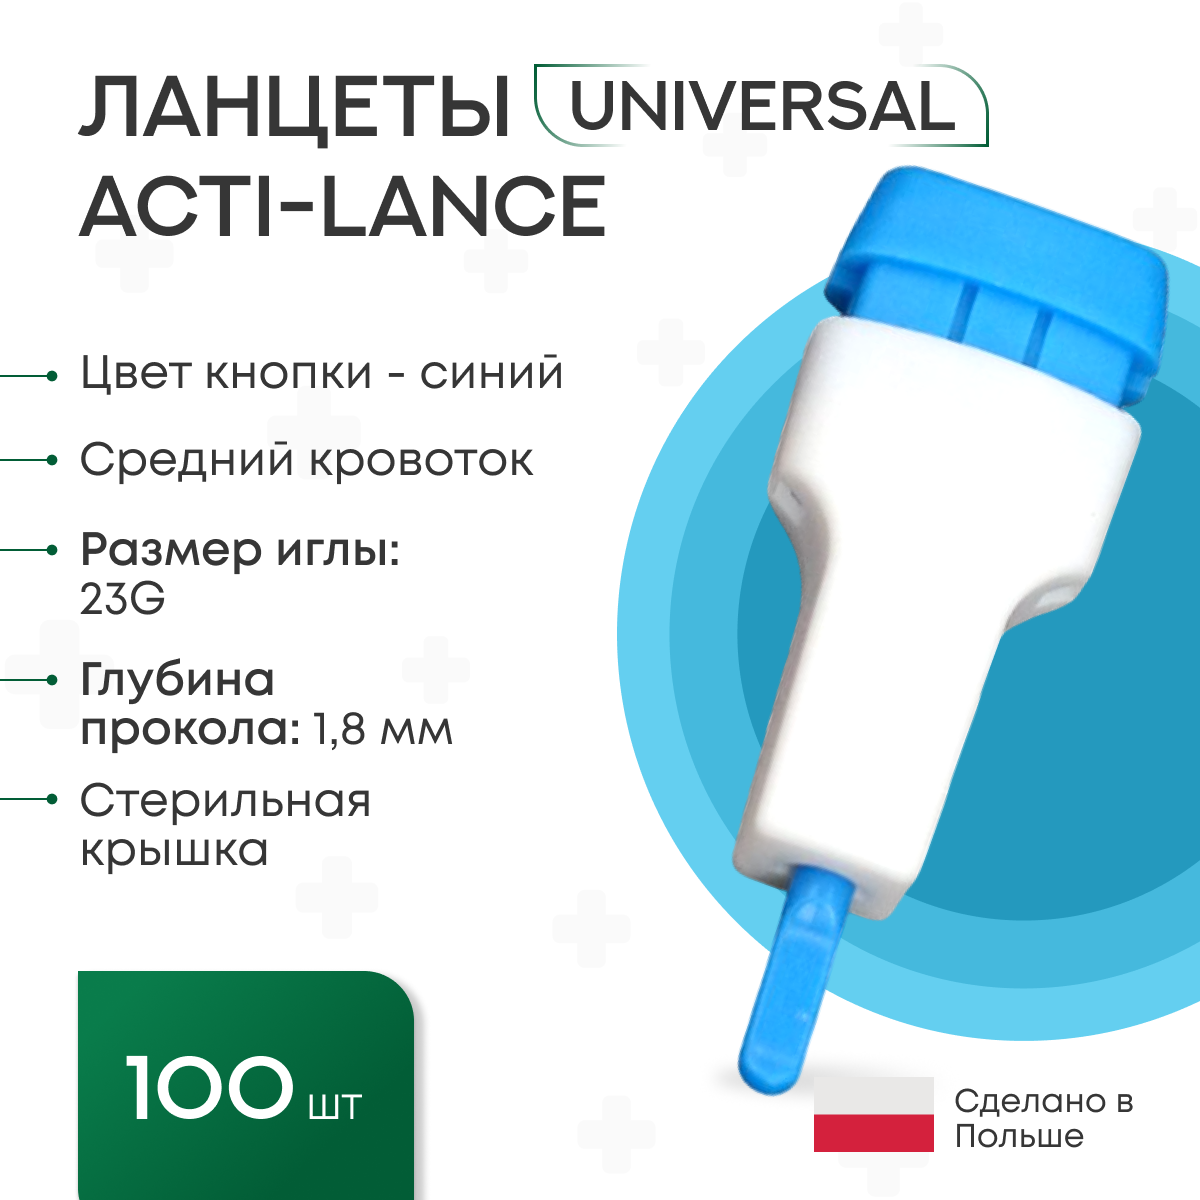 Ланцеты Acti-lance Universal для капиллярного забора крови, 100 шт., глубина прокола 1,8 мм, синие